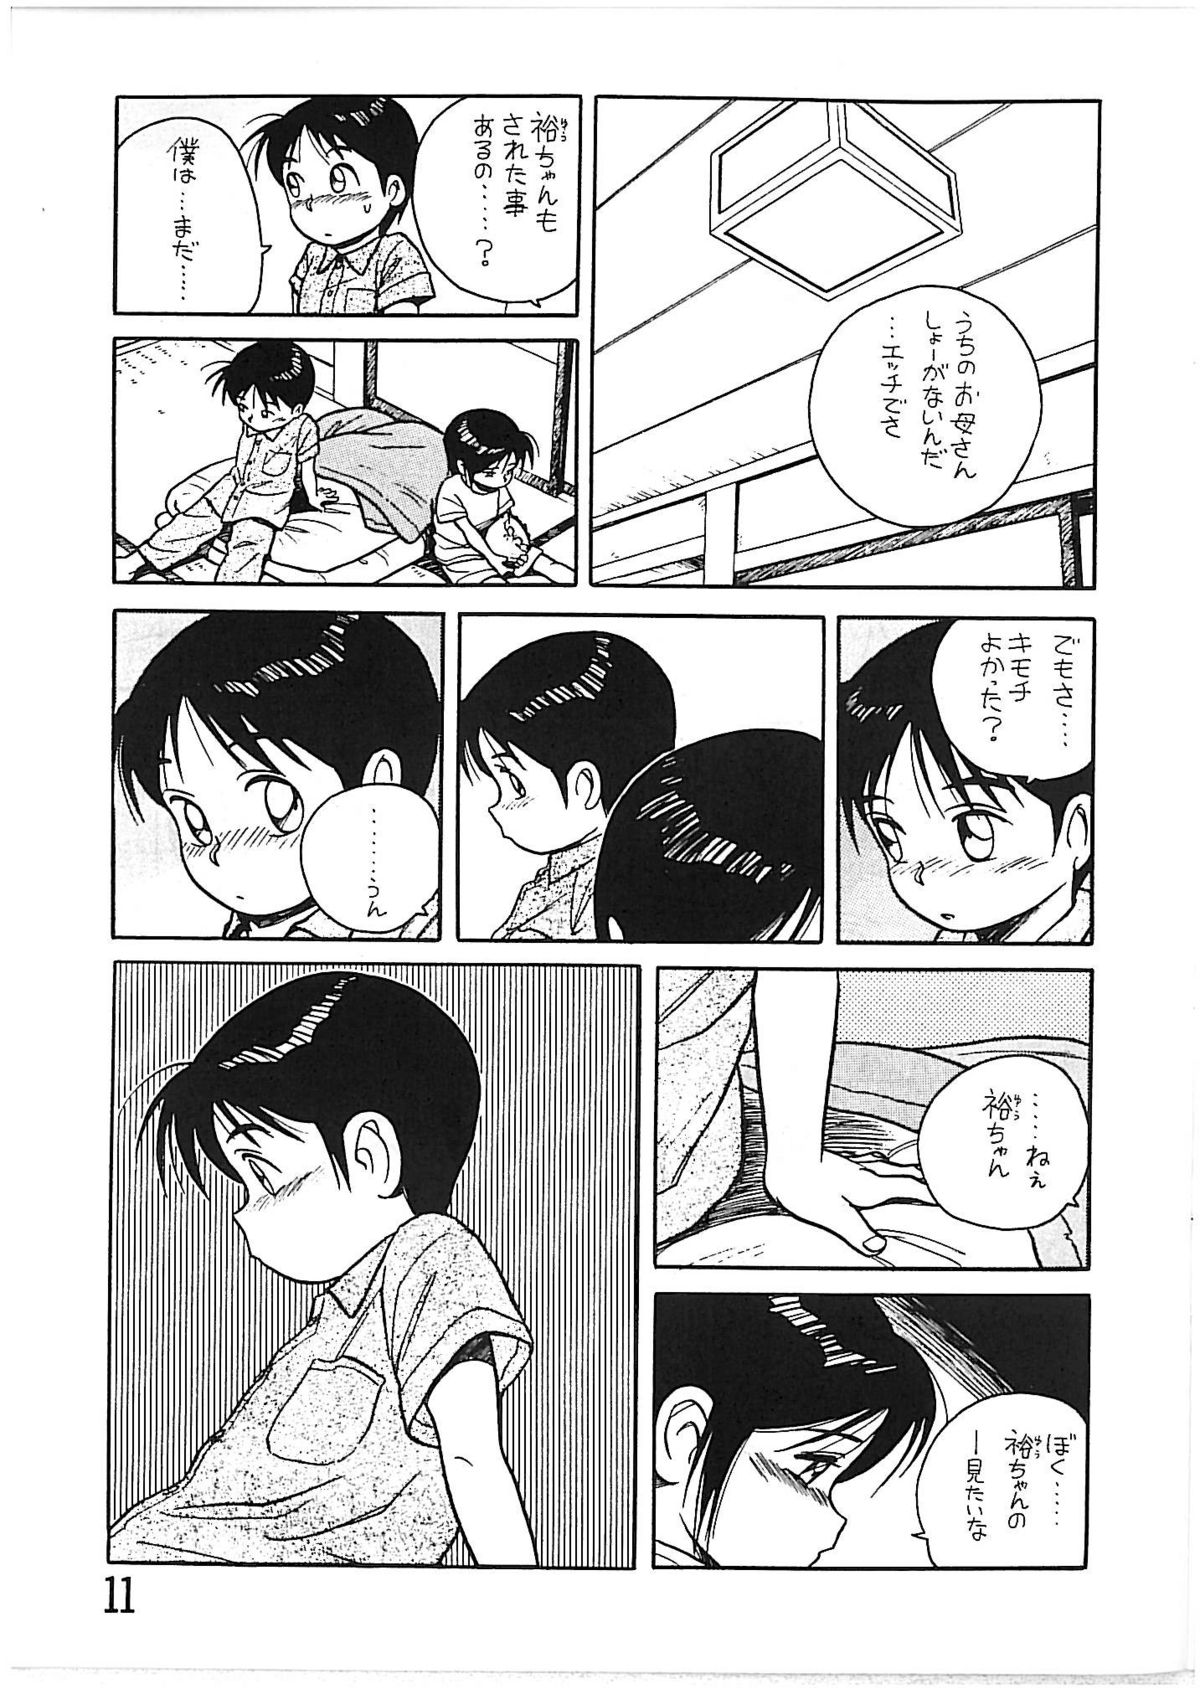 [NEW WORLD ORDER (Anda Daichi)] BOY'S LIFE CORE 2 page 10 full